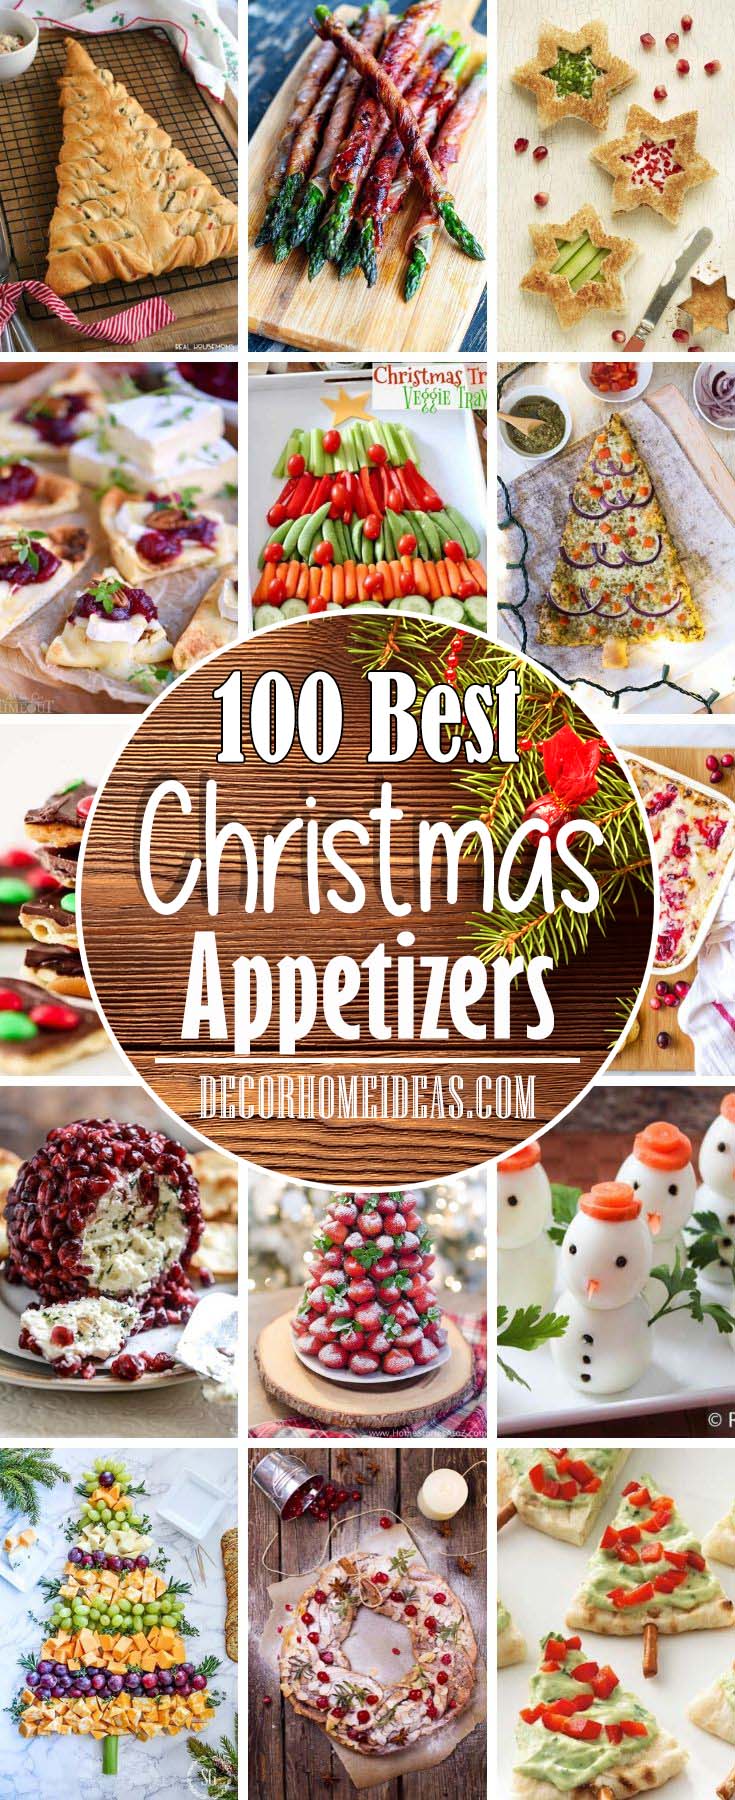 Best Christmas Appetizers #Christmas #appetizers #platters #decorhomeideas